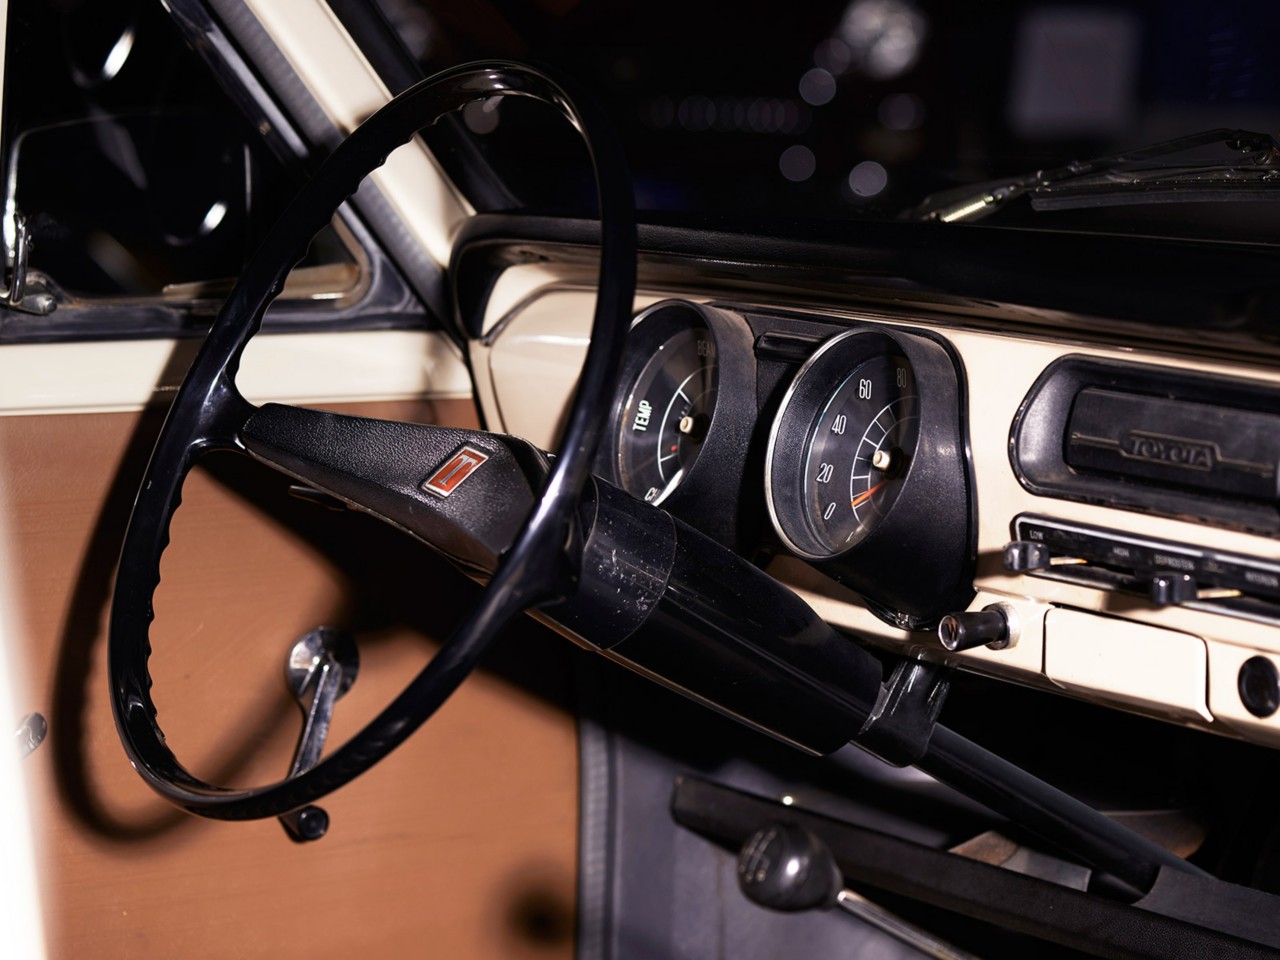 Original Toyota Corolla steering wheel